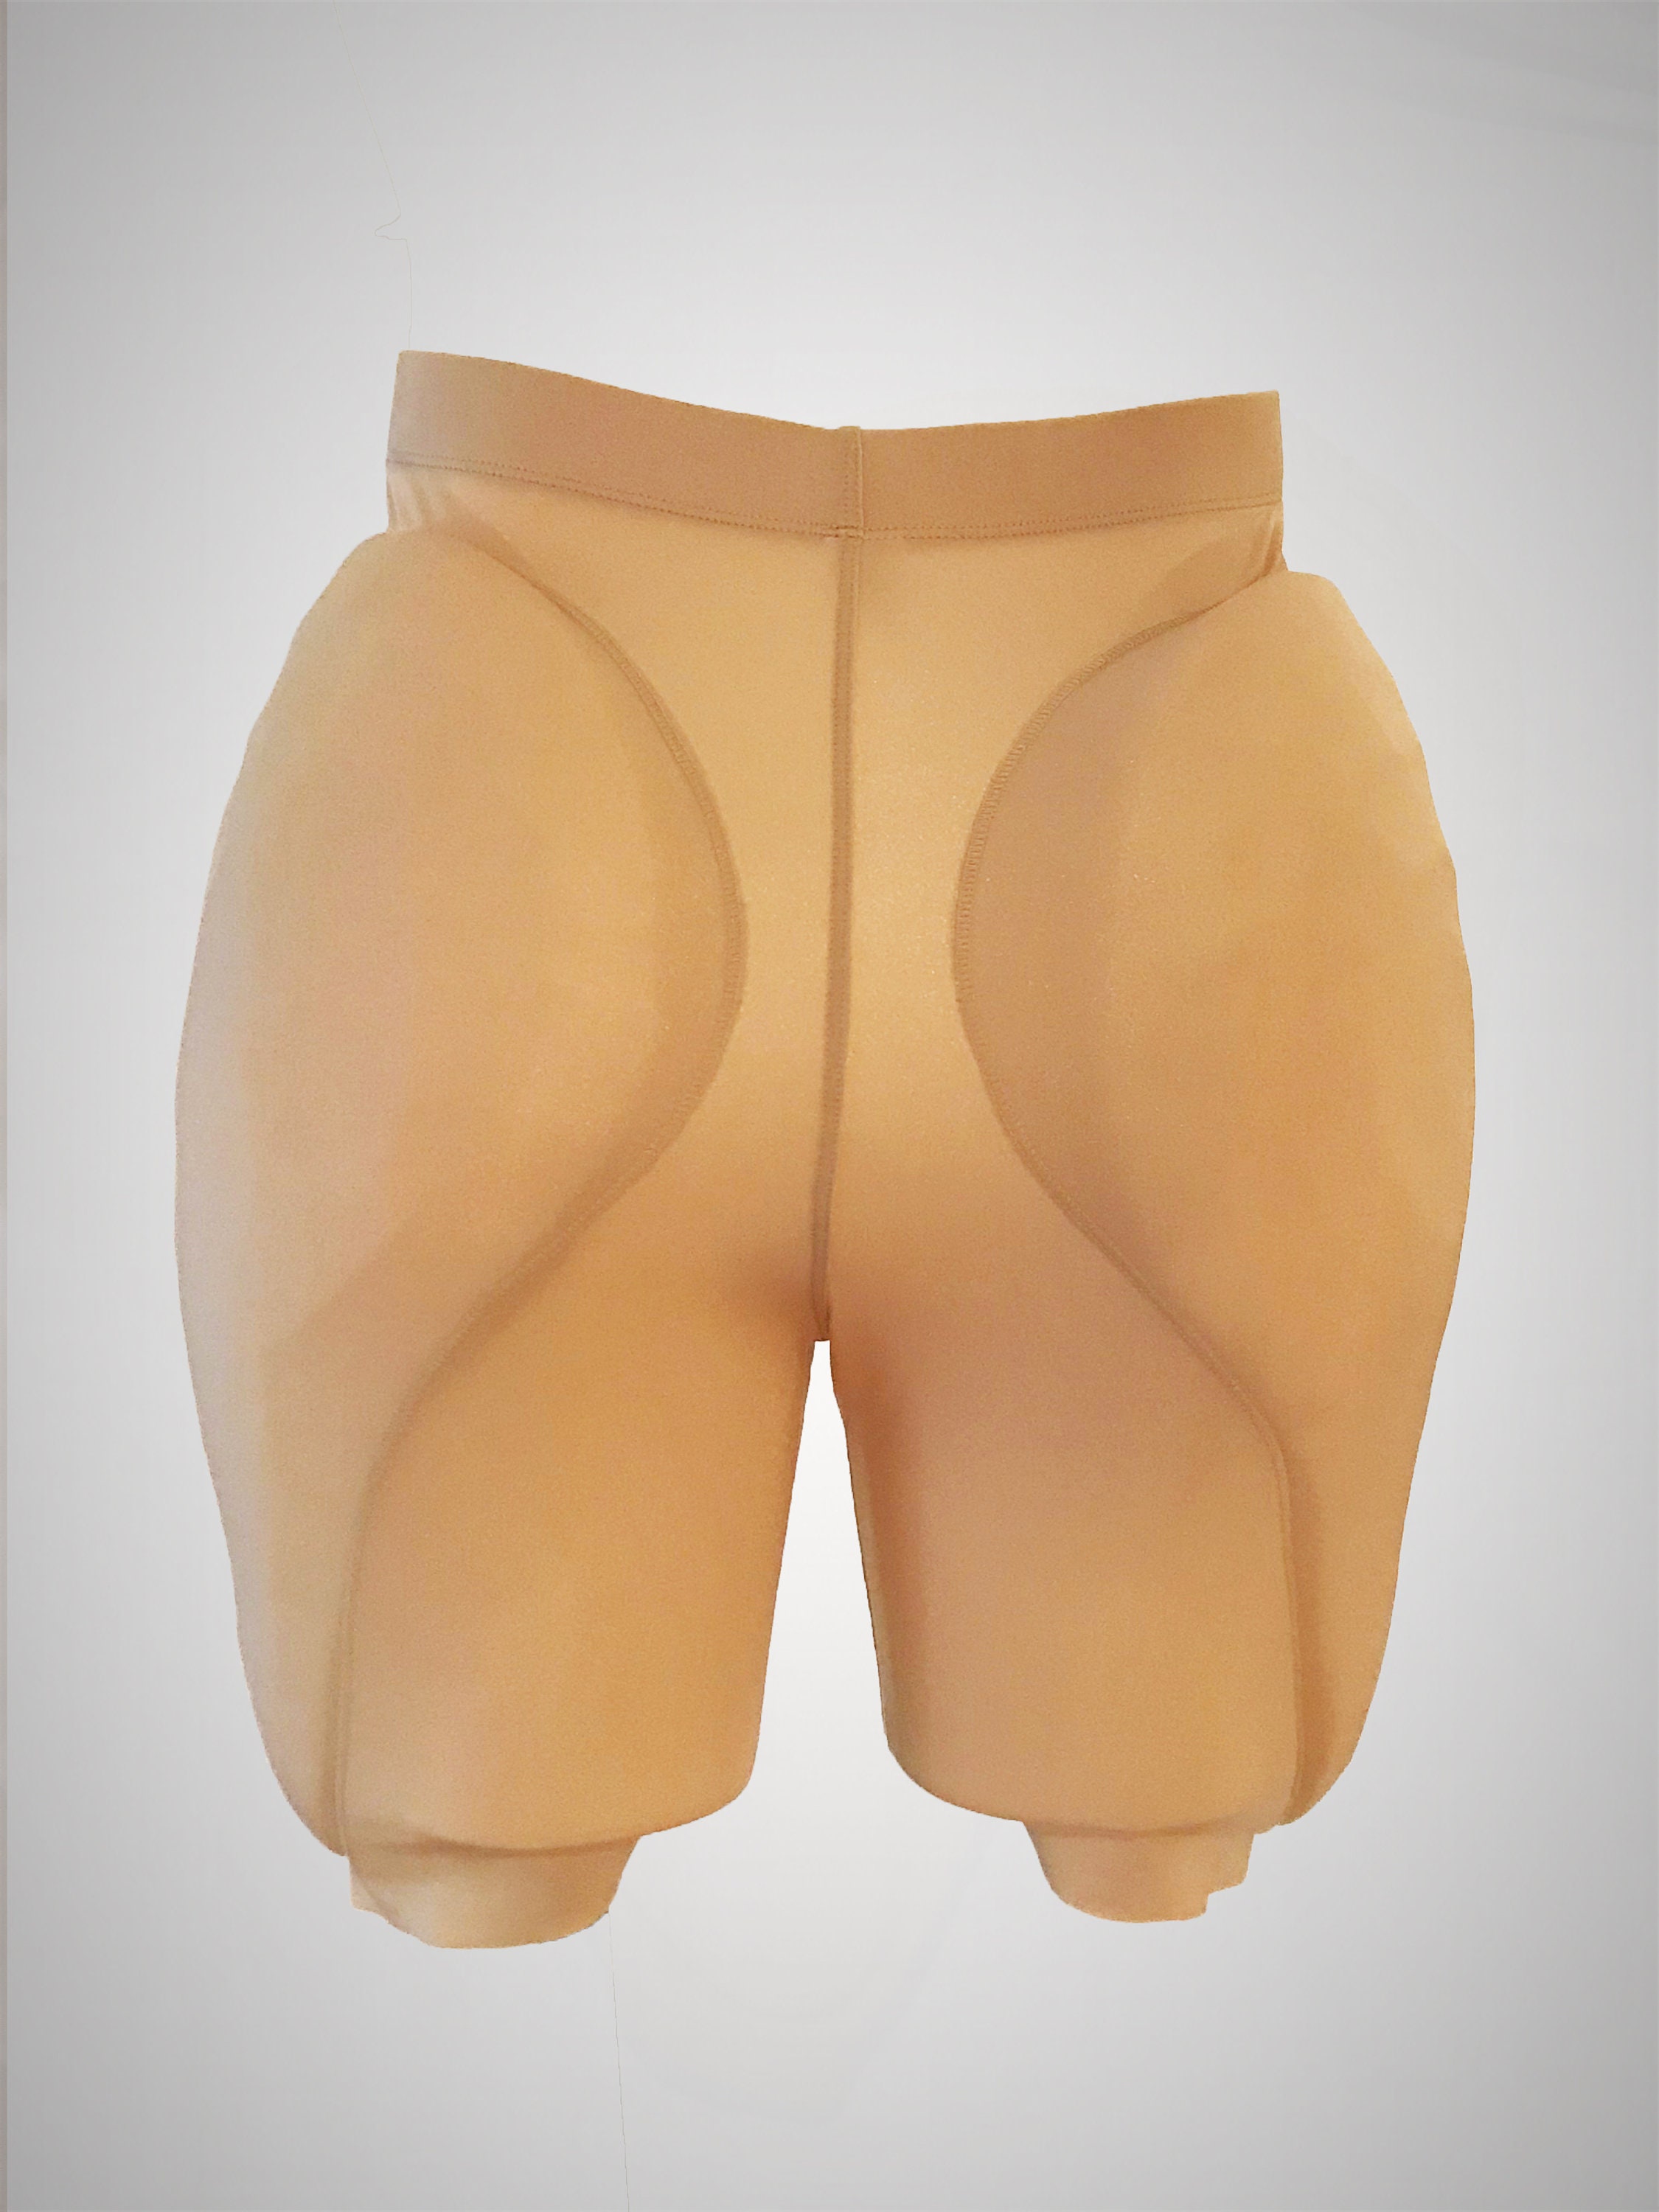 NEW Sliot MEDIUM Nude Hip Dip Pads Fake Butt Padded Underwear Cross Dress  LT